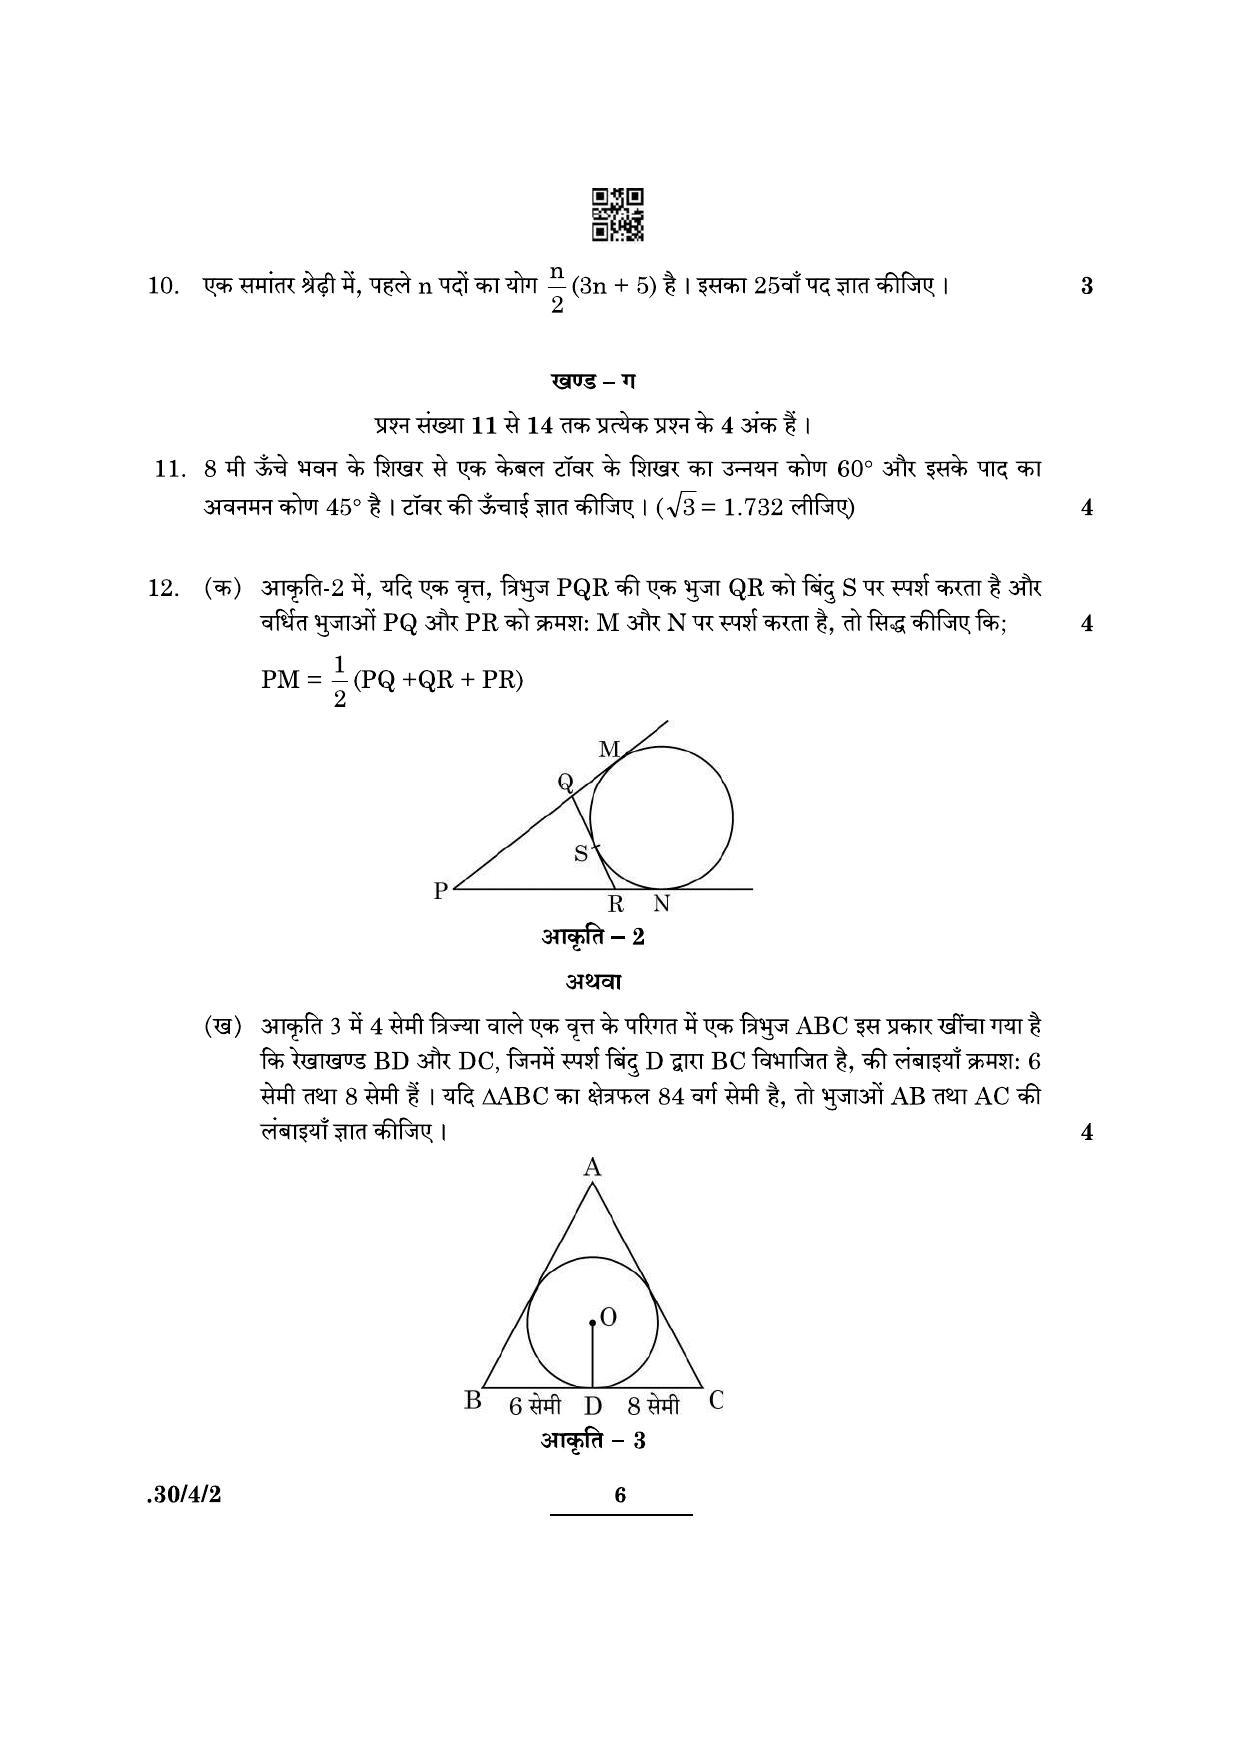 CBSE Class 10 Maths (30/4/2 - SET II) 2022 Question Paper - Page 6